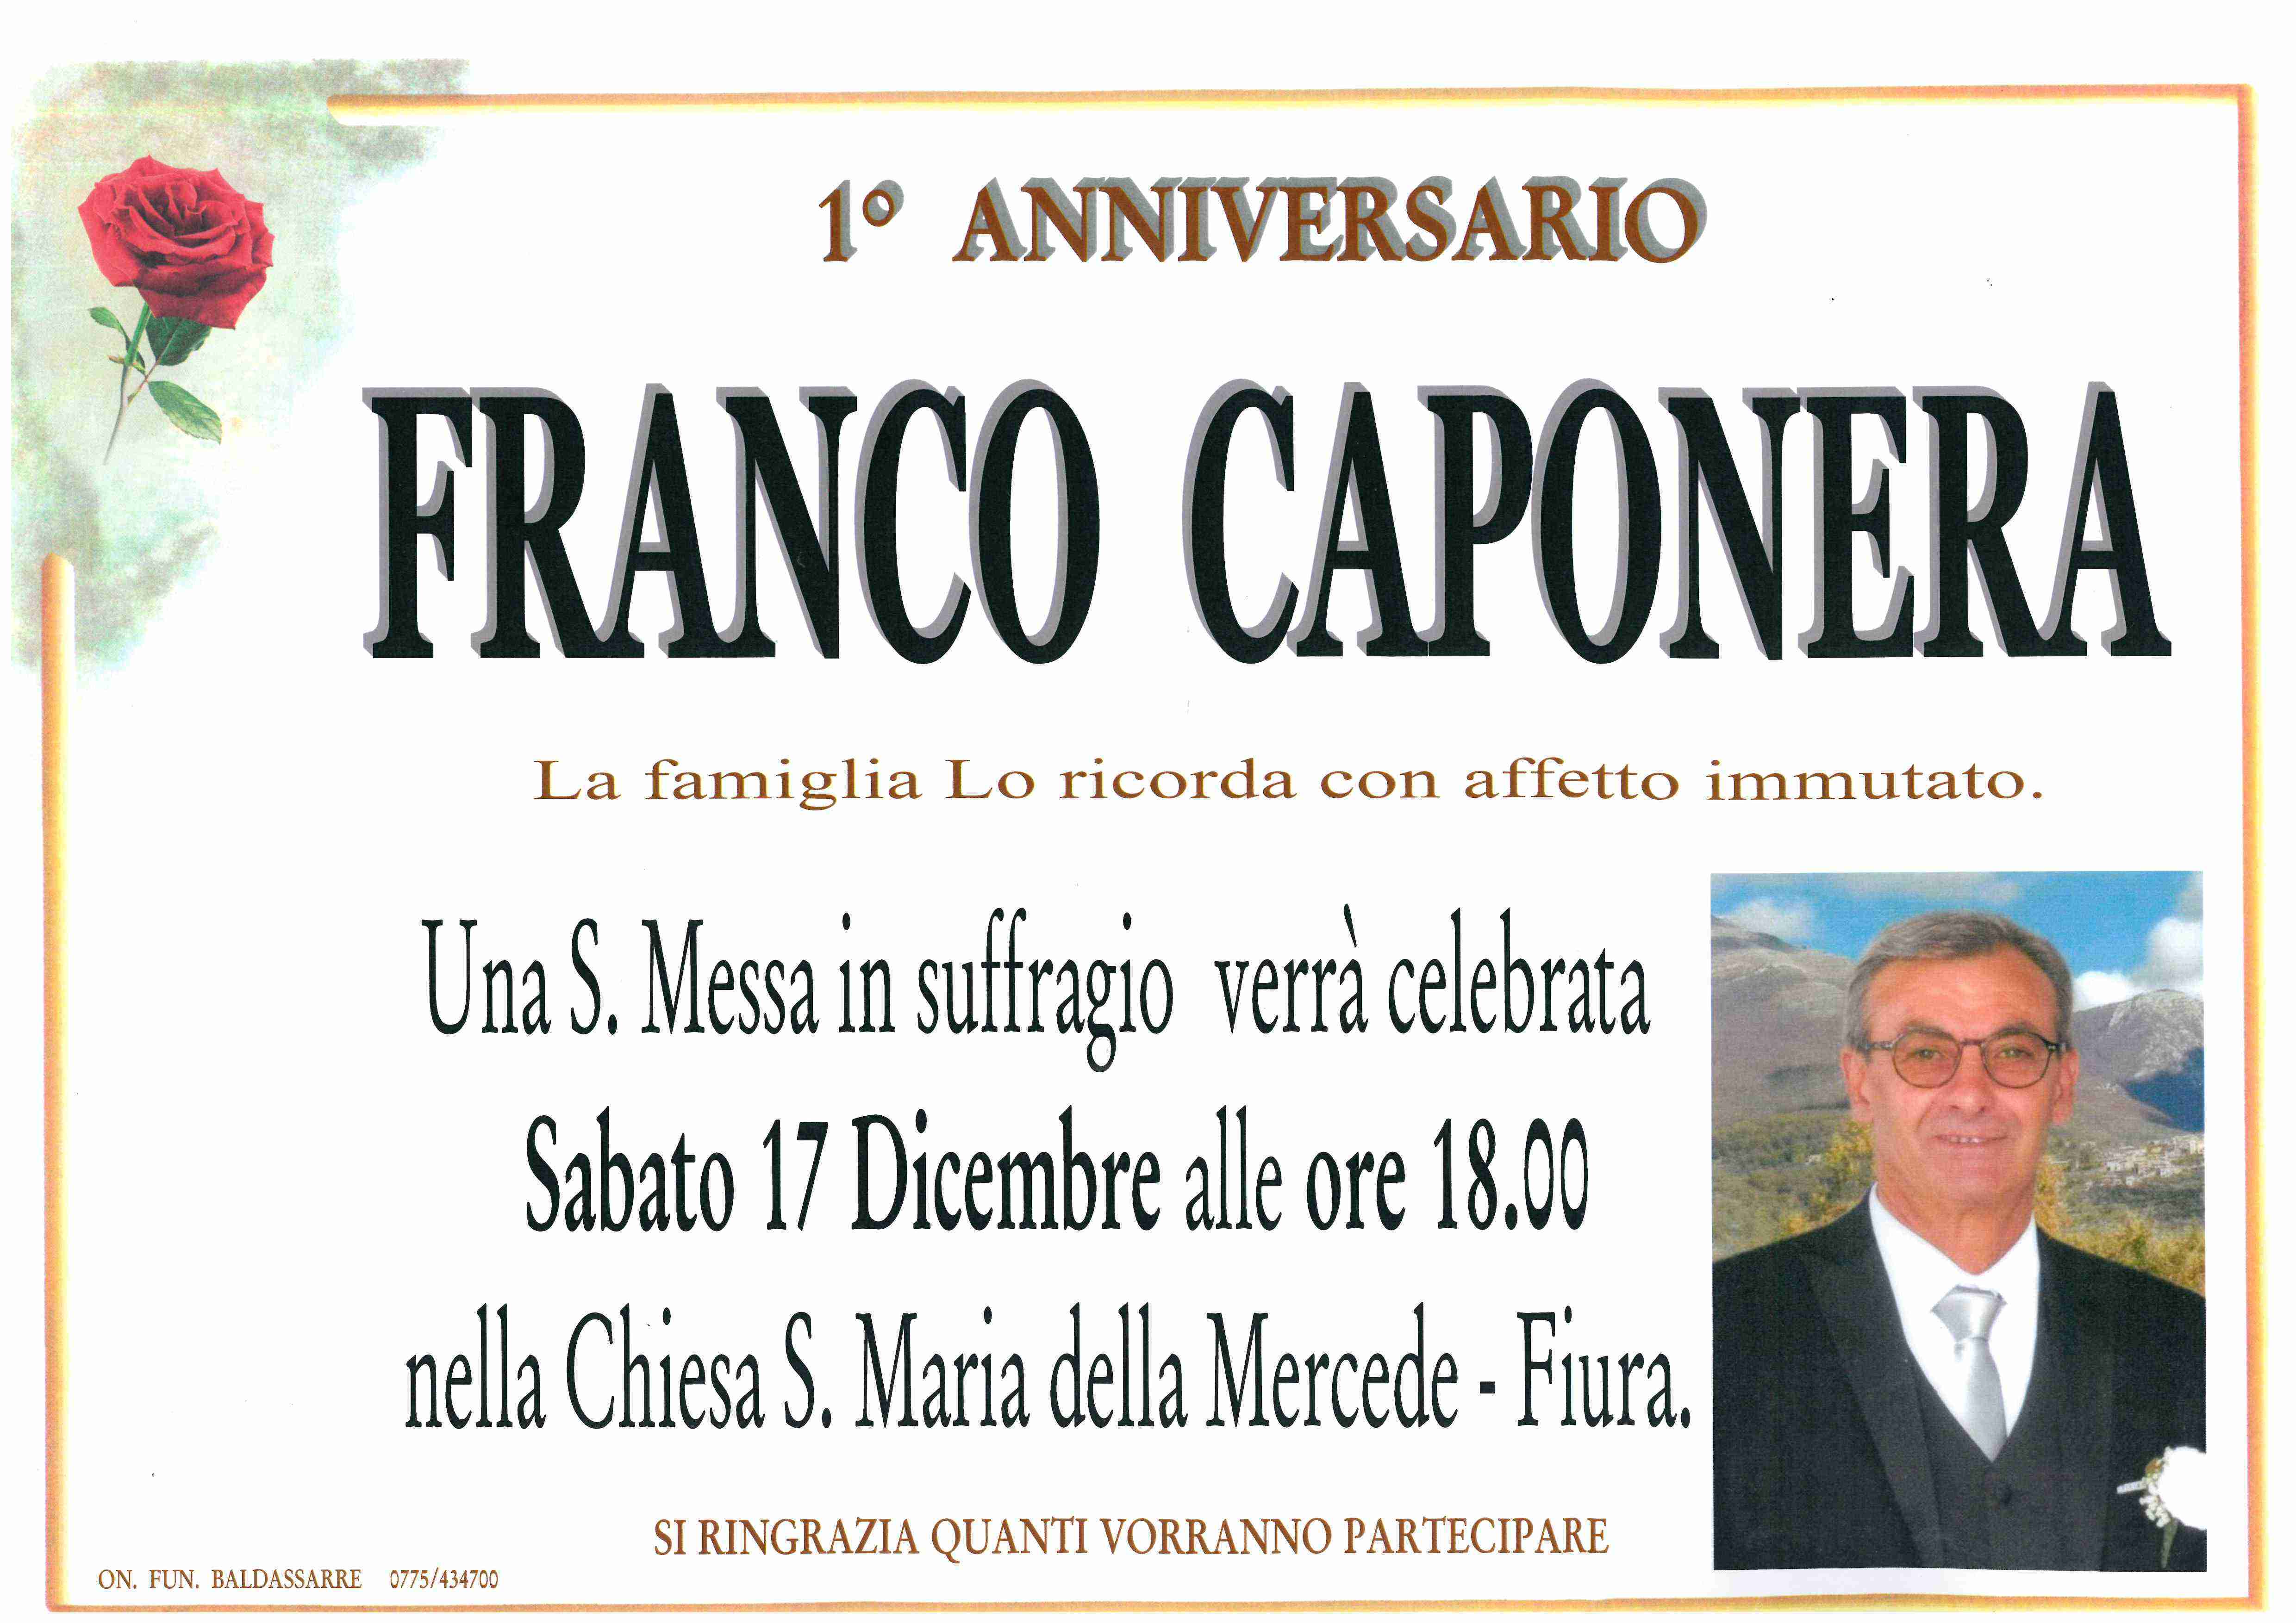 Franco Caponera